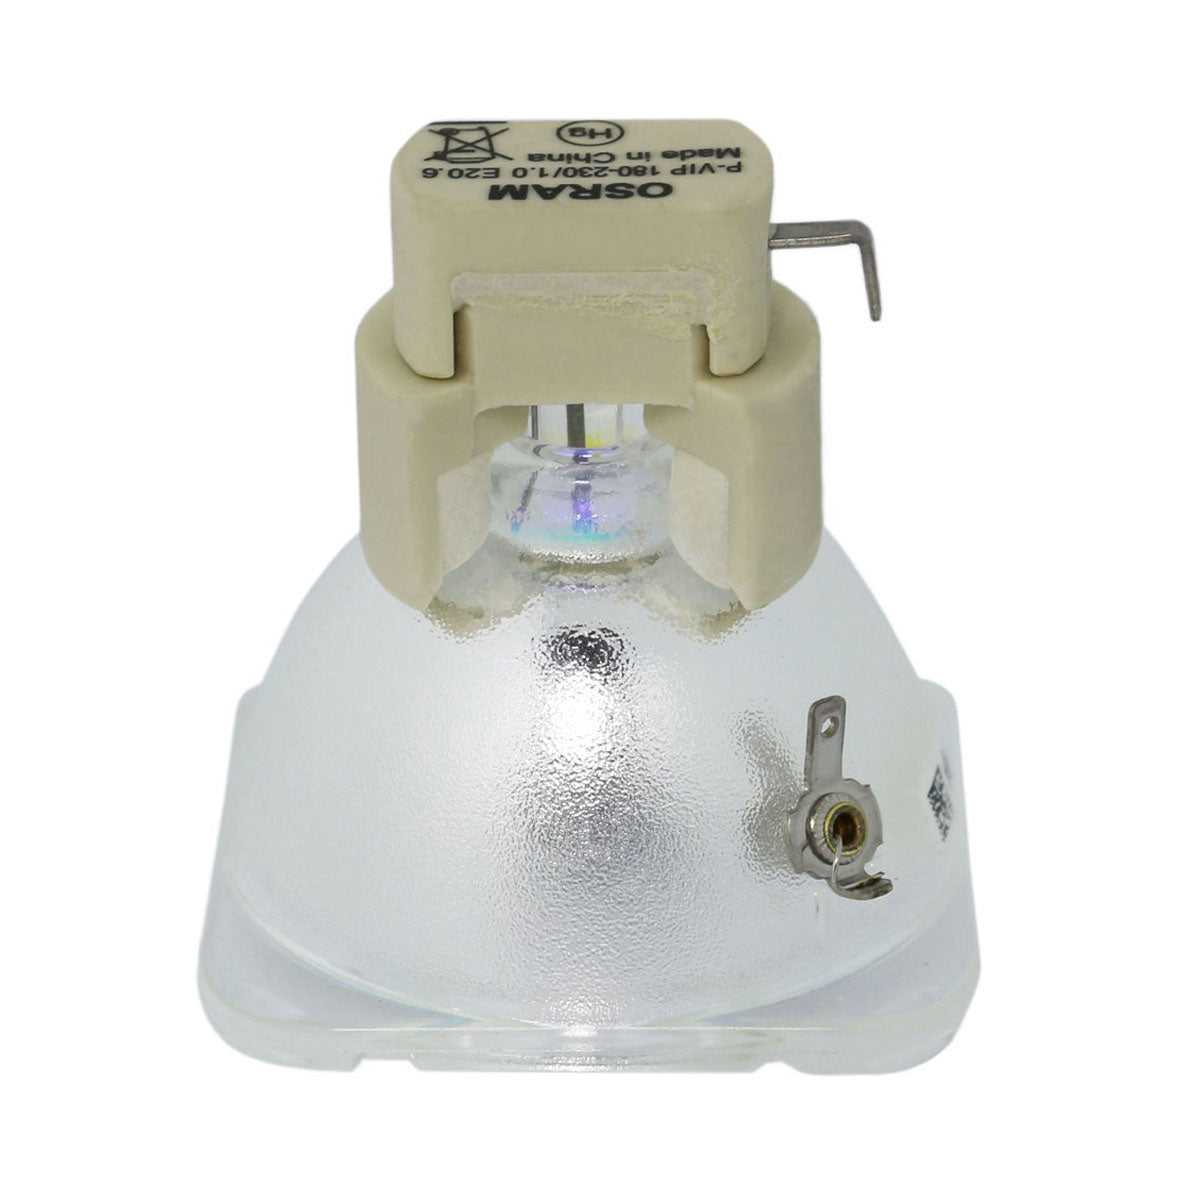 Infocus SP-LAMP-050 Osram Projector Bare Lamp